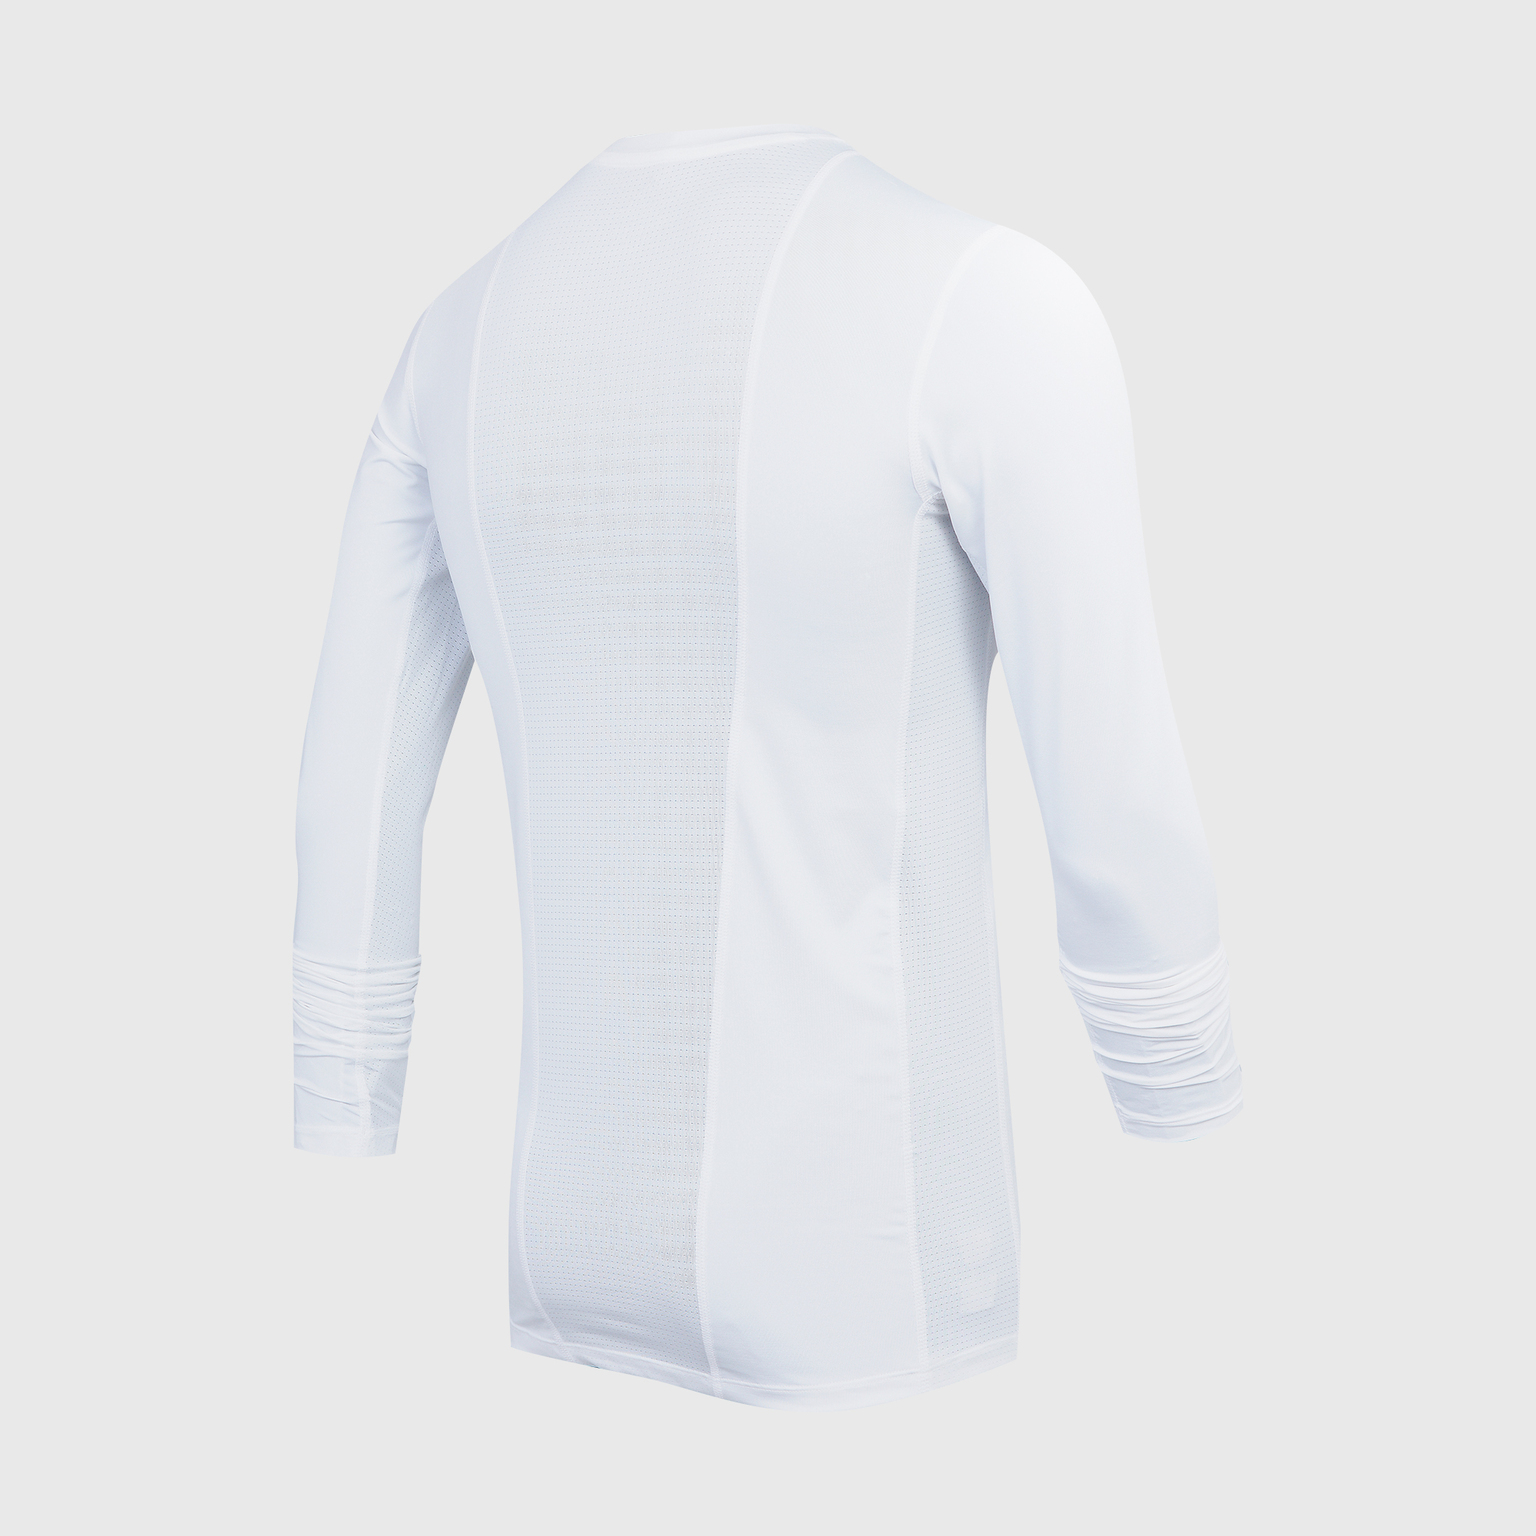 Белье футболка Adidas TF LS Top GU7334